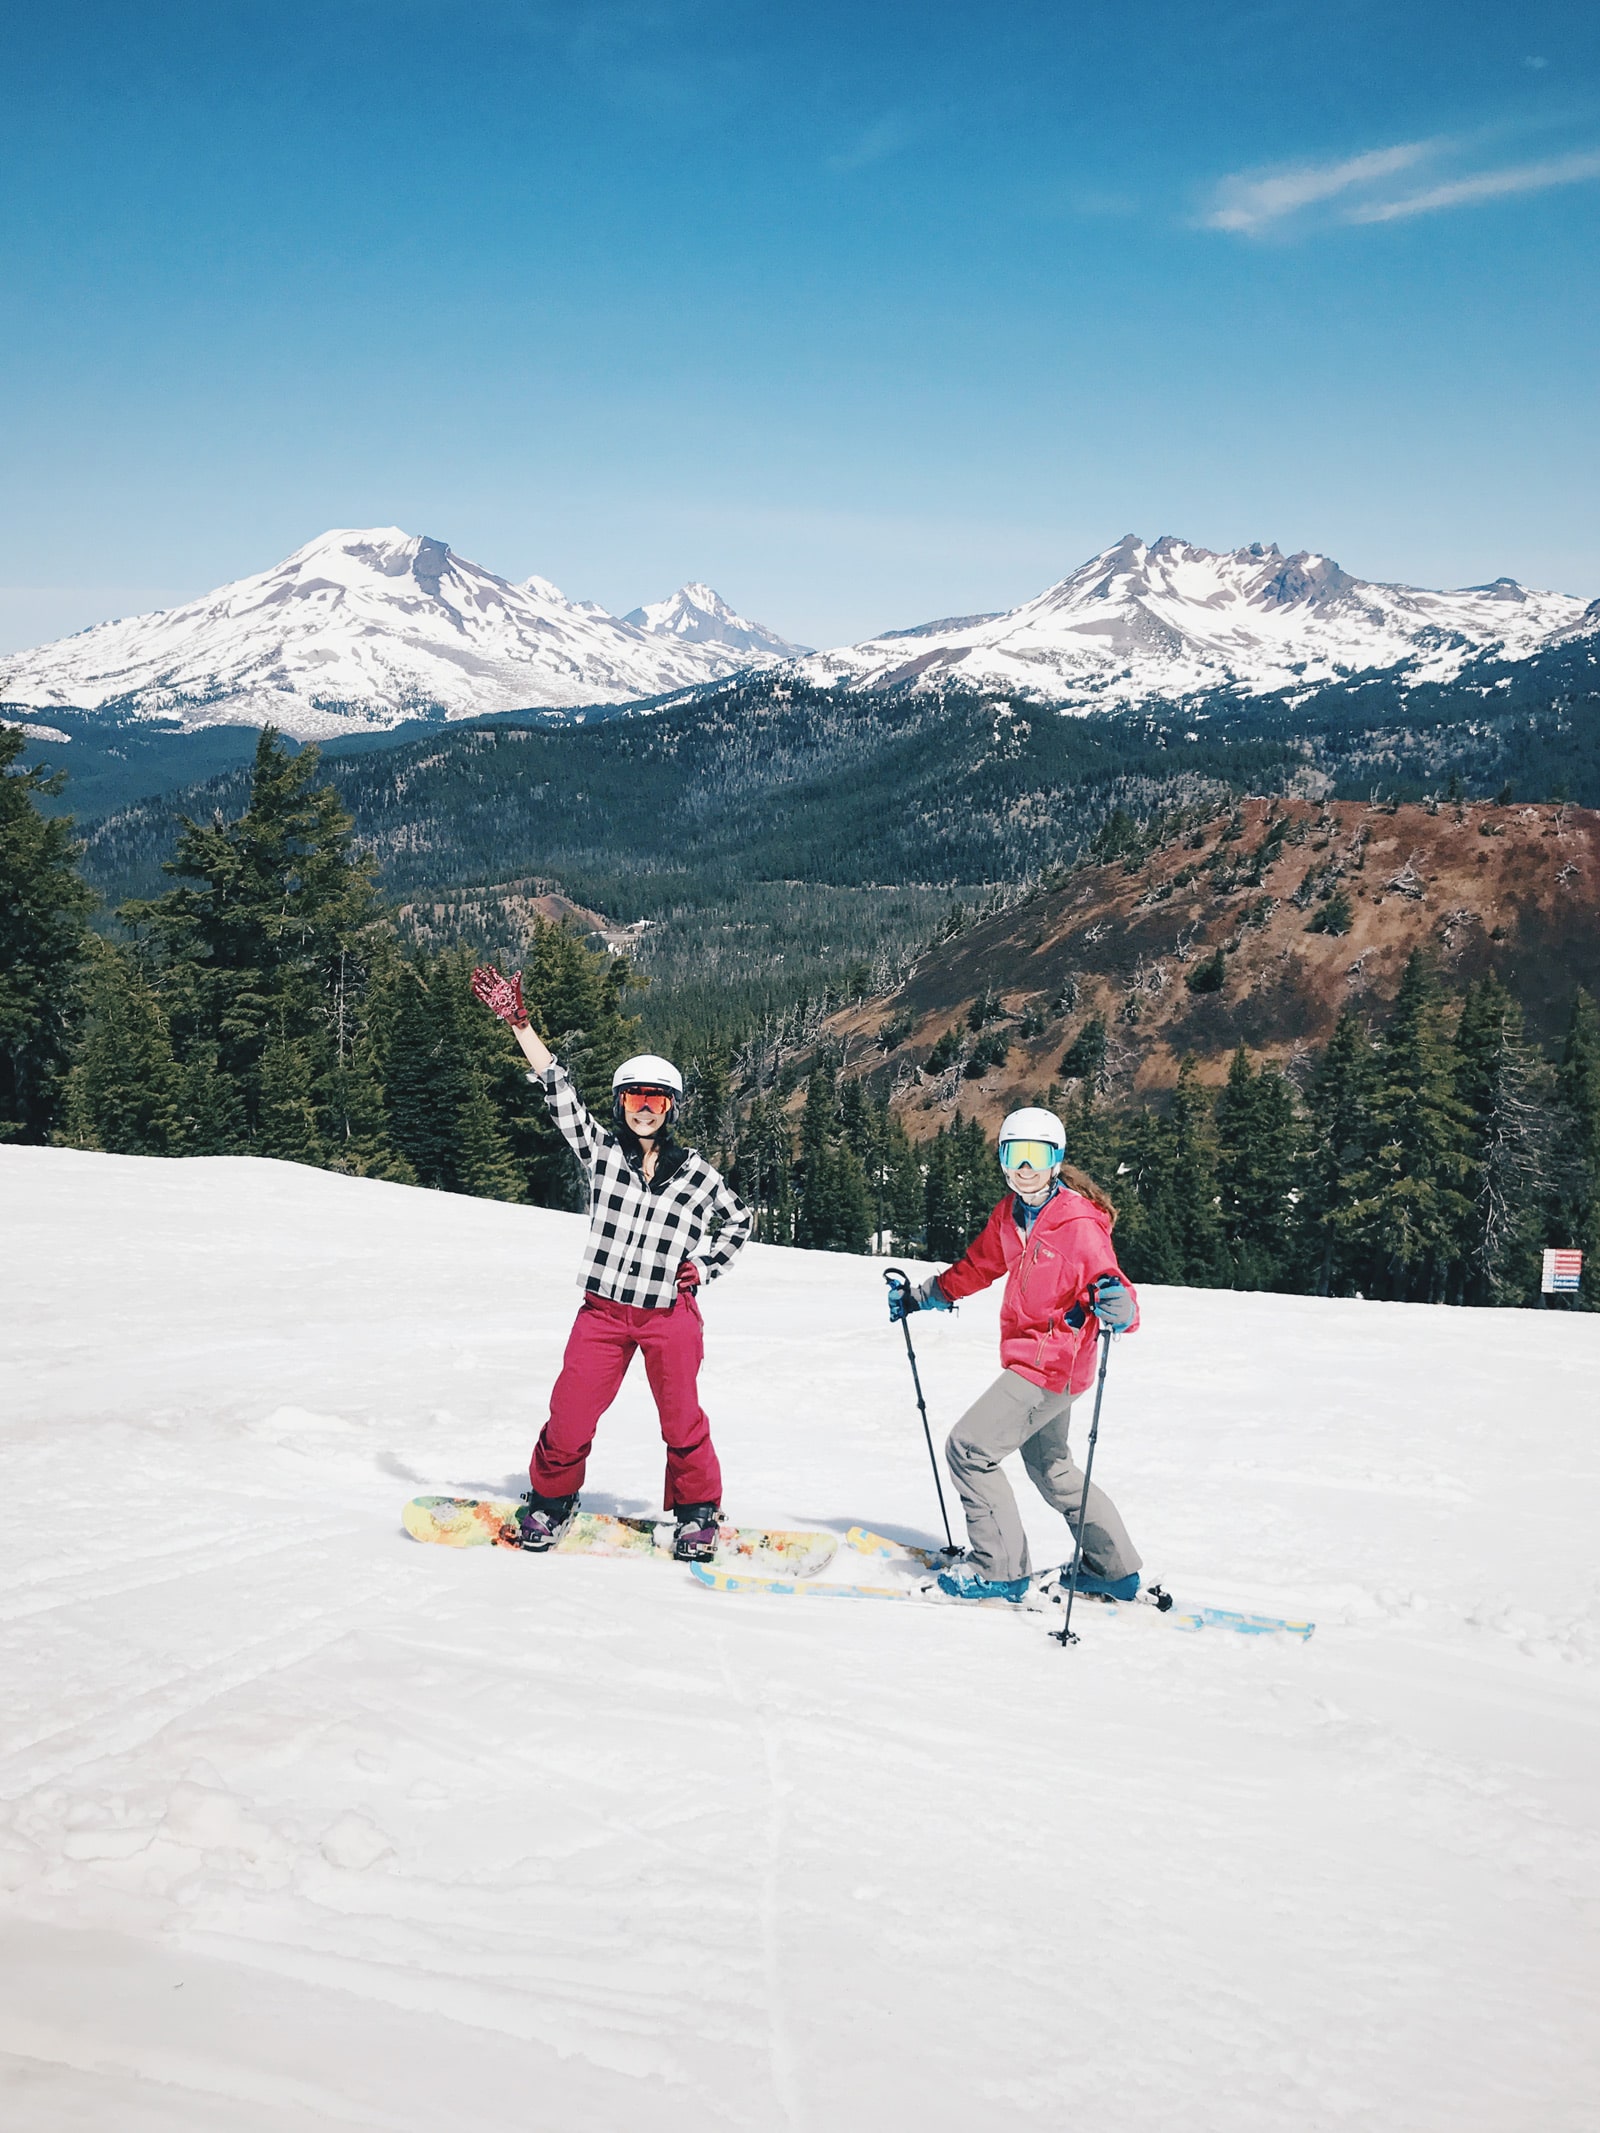 Snowboarding on Mount Bachelor